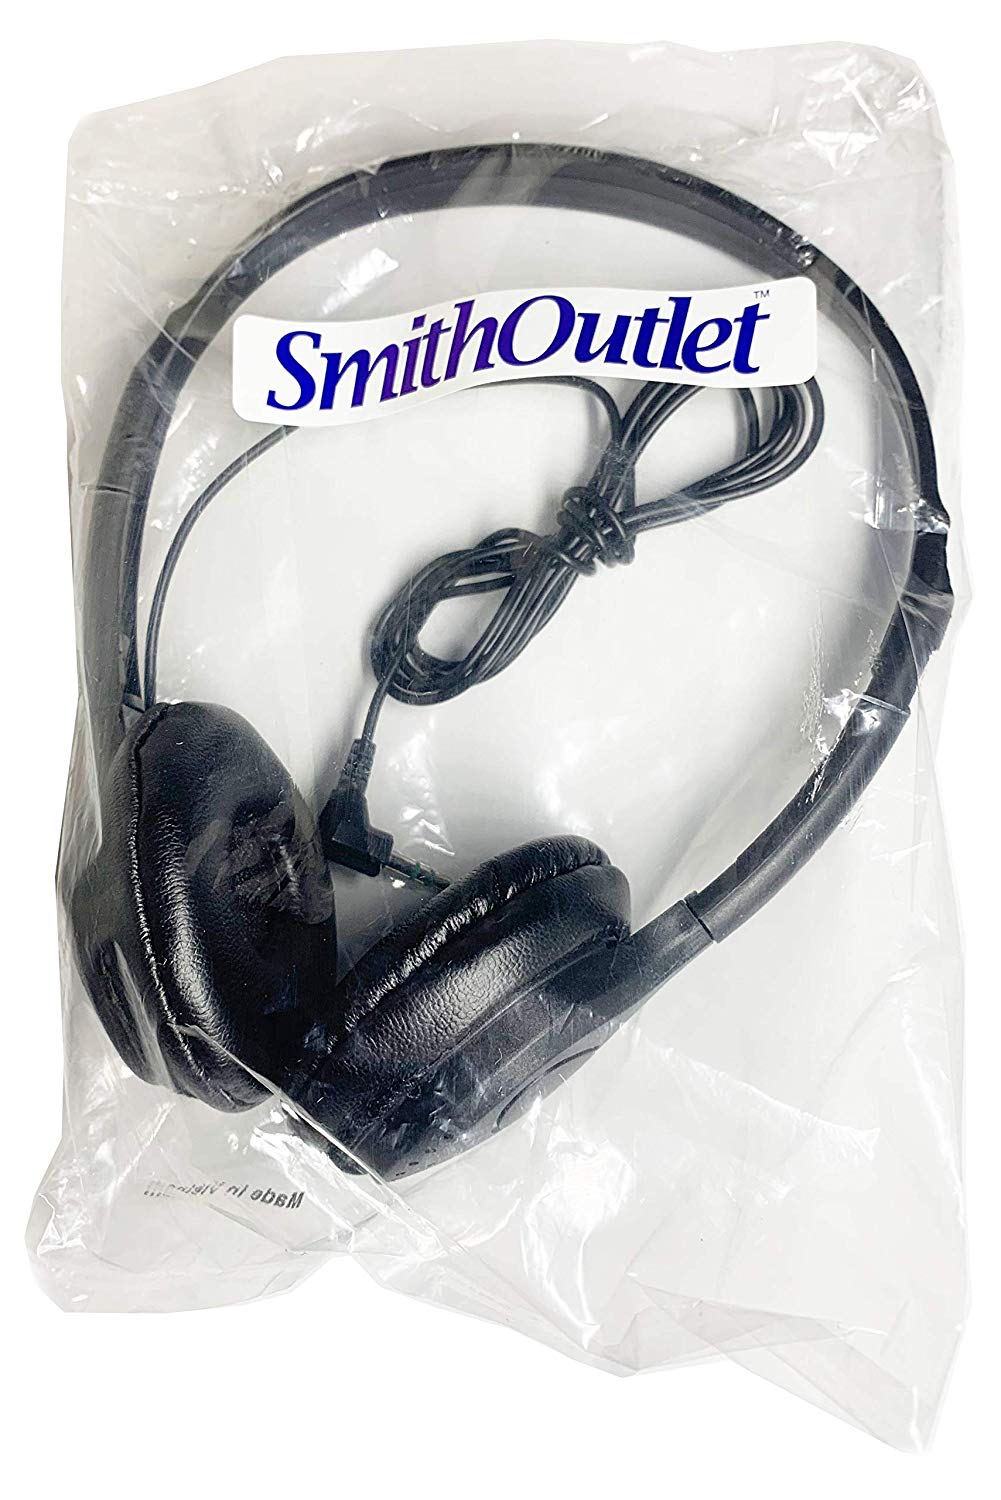 SmithOutlet 10-Pack Headphones Box Packaging for Educational Bulk Orders